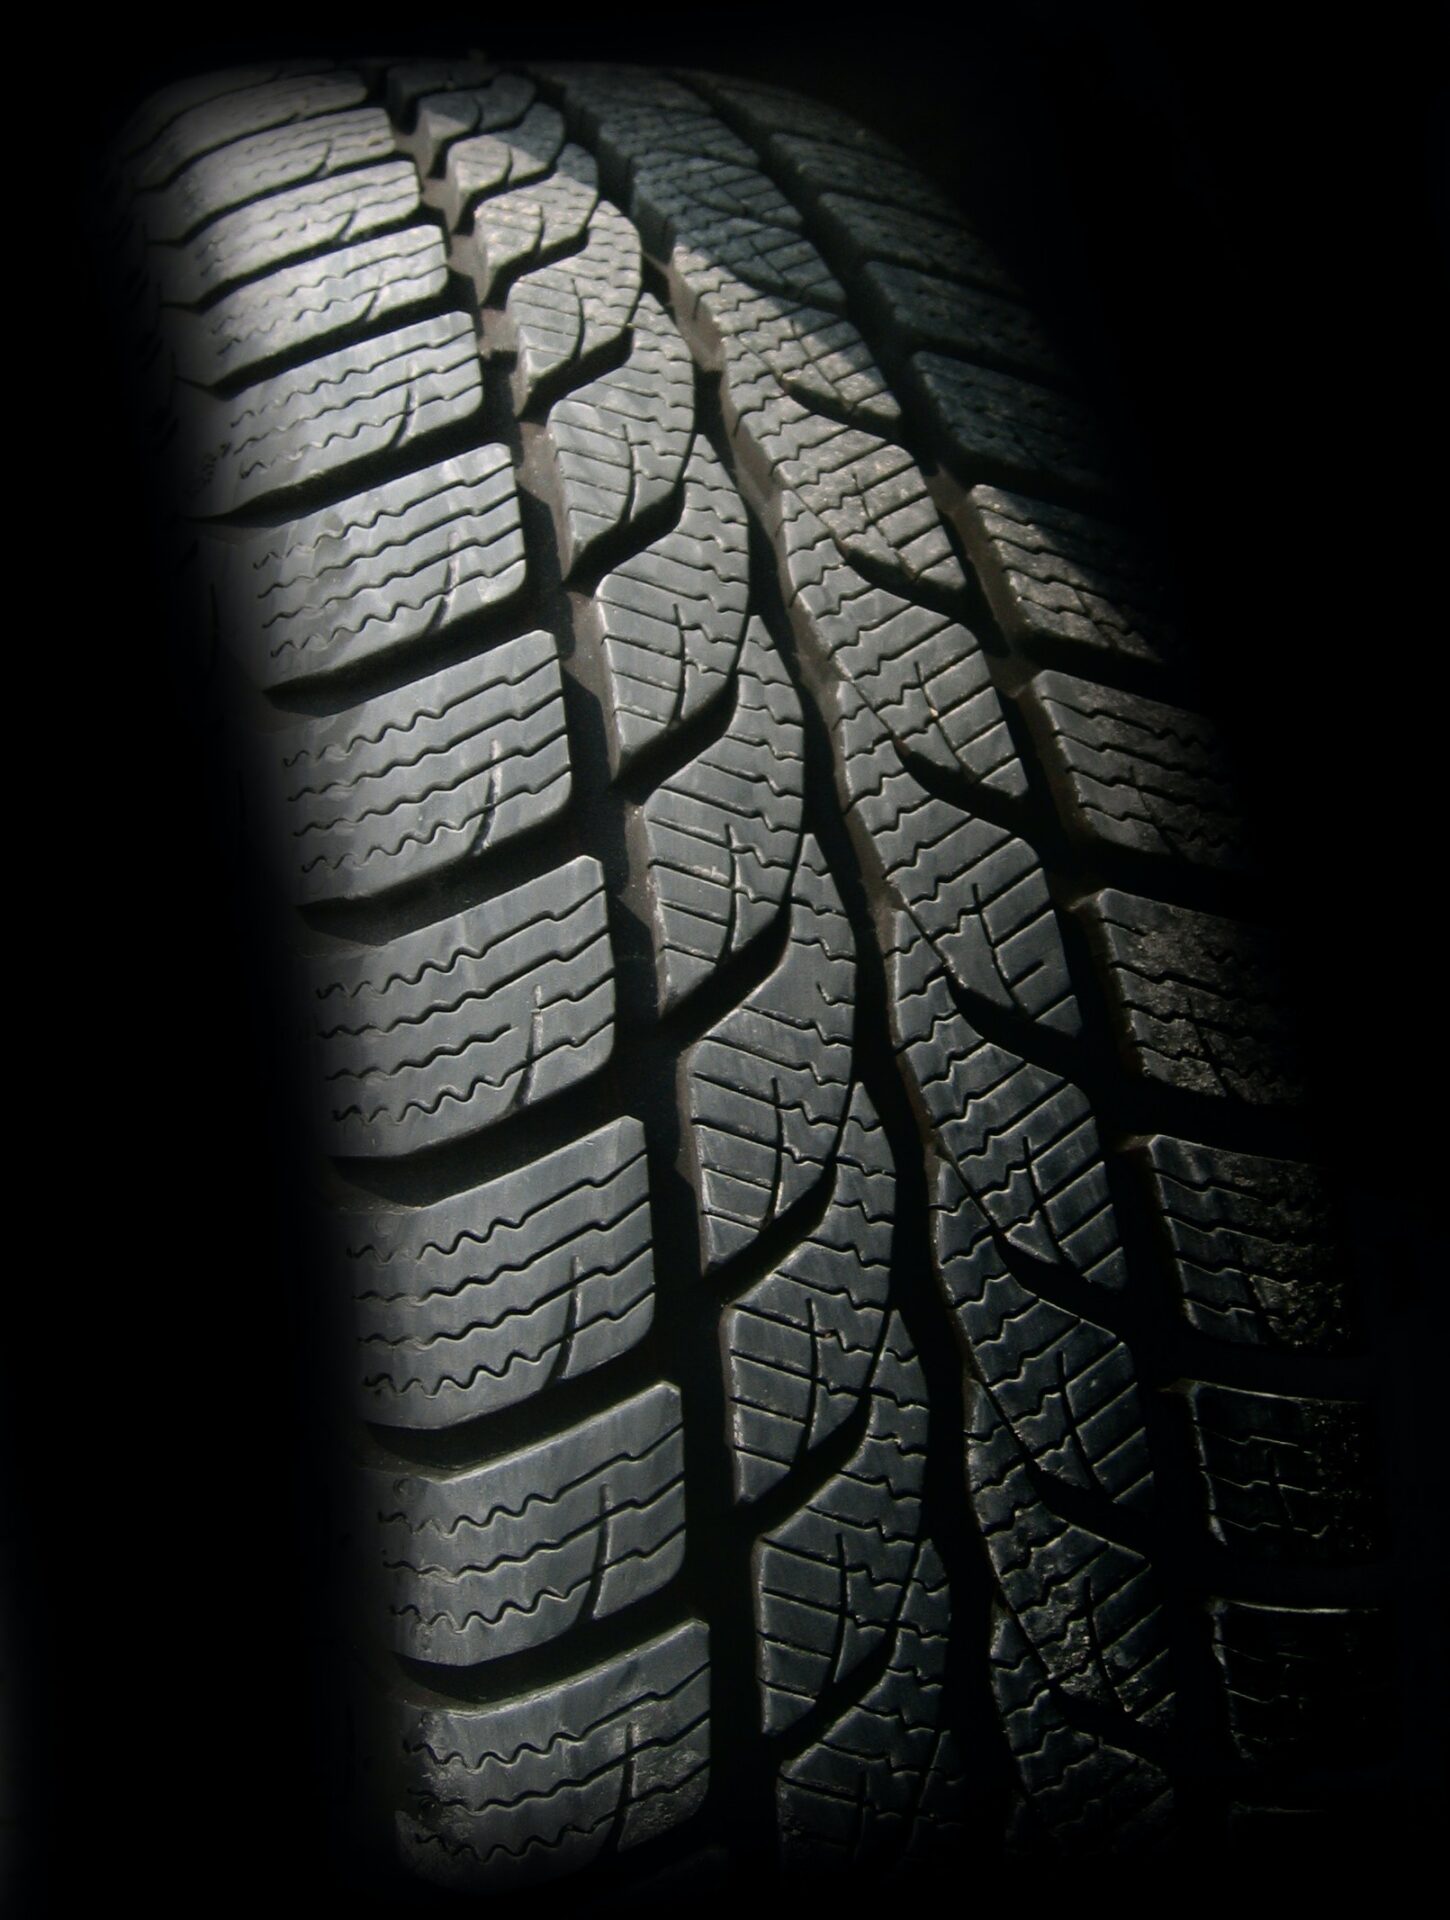 Close-up of black tire